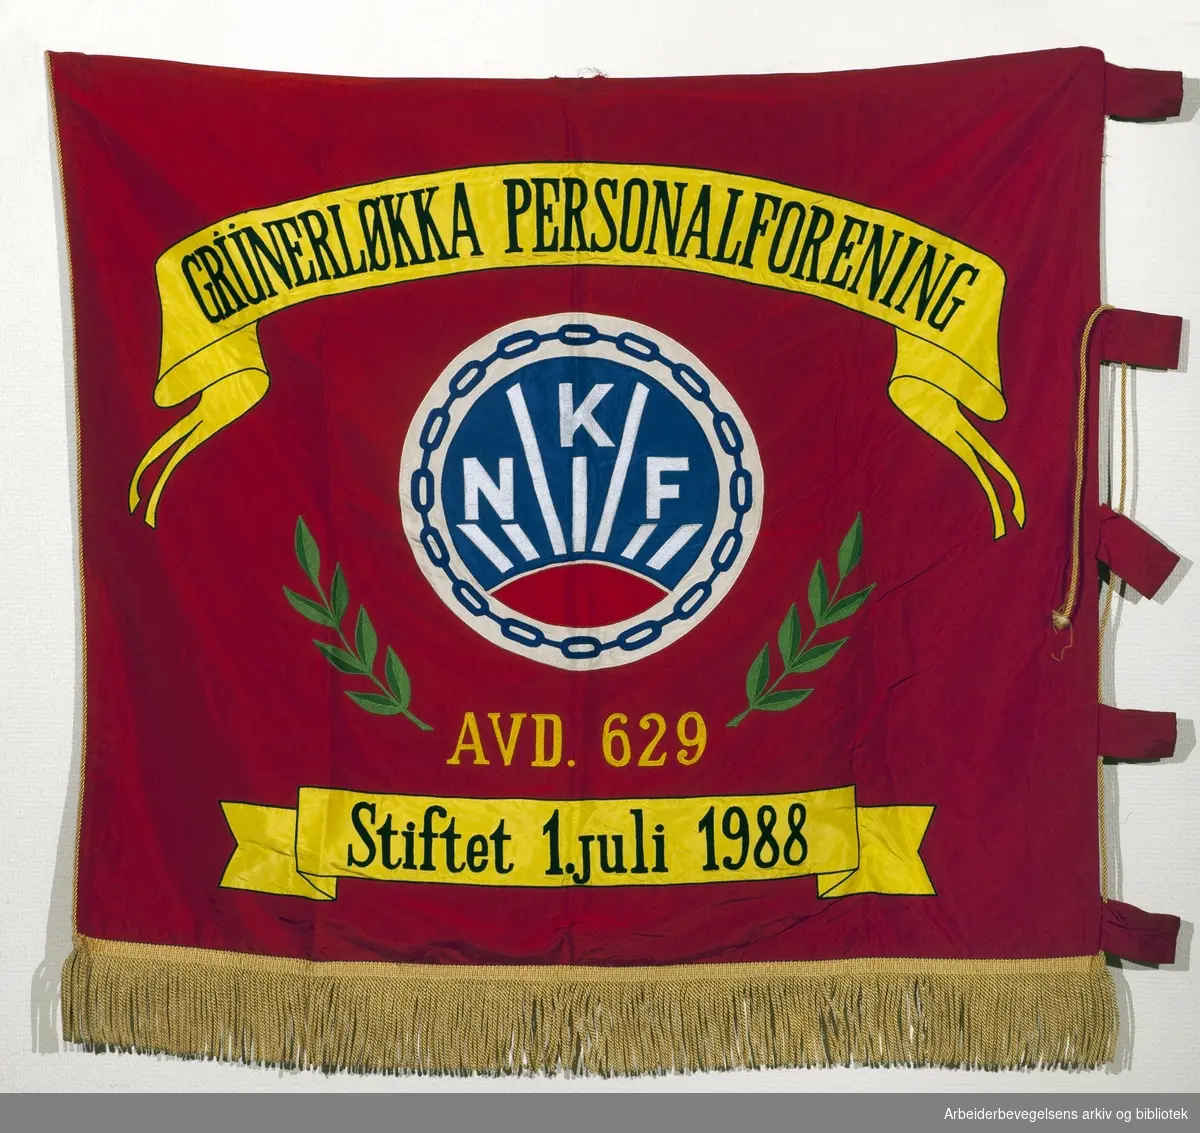 Grünerløkka Personalforening..Forside..Fanetekst:.Grünerløkka Personalforening.NKF.avd. 629.Stiftet: 1. juli 1988